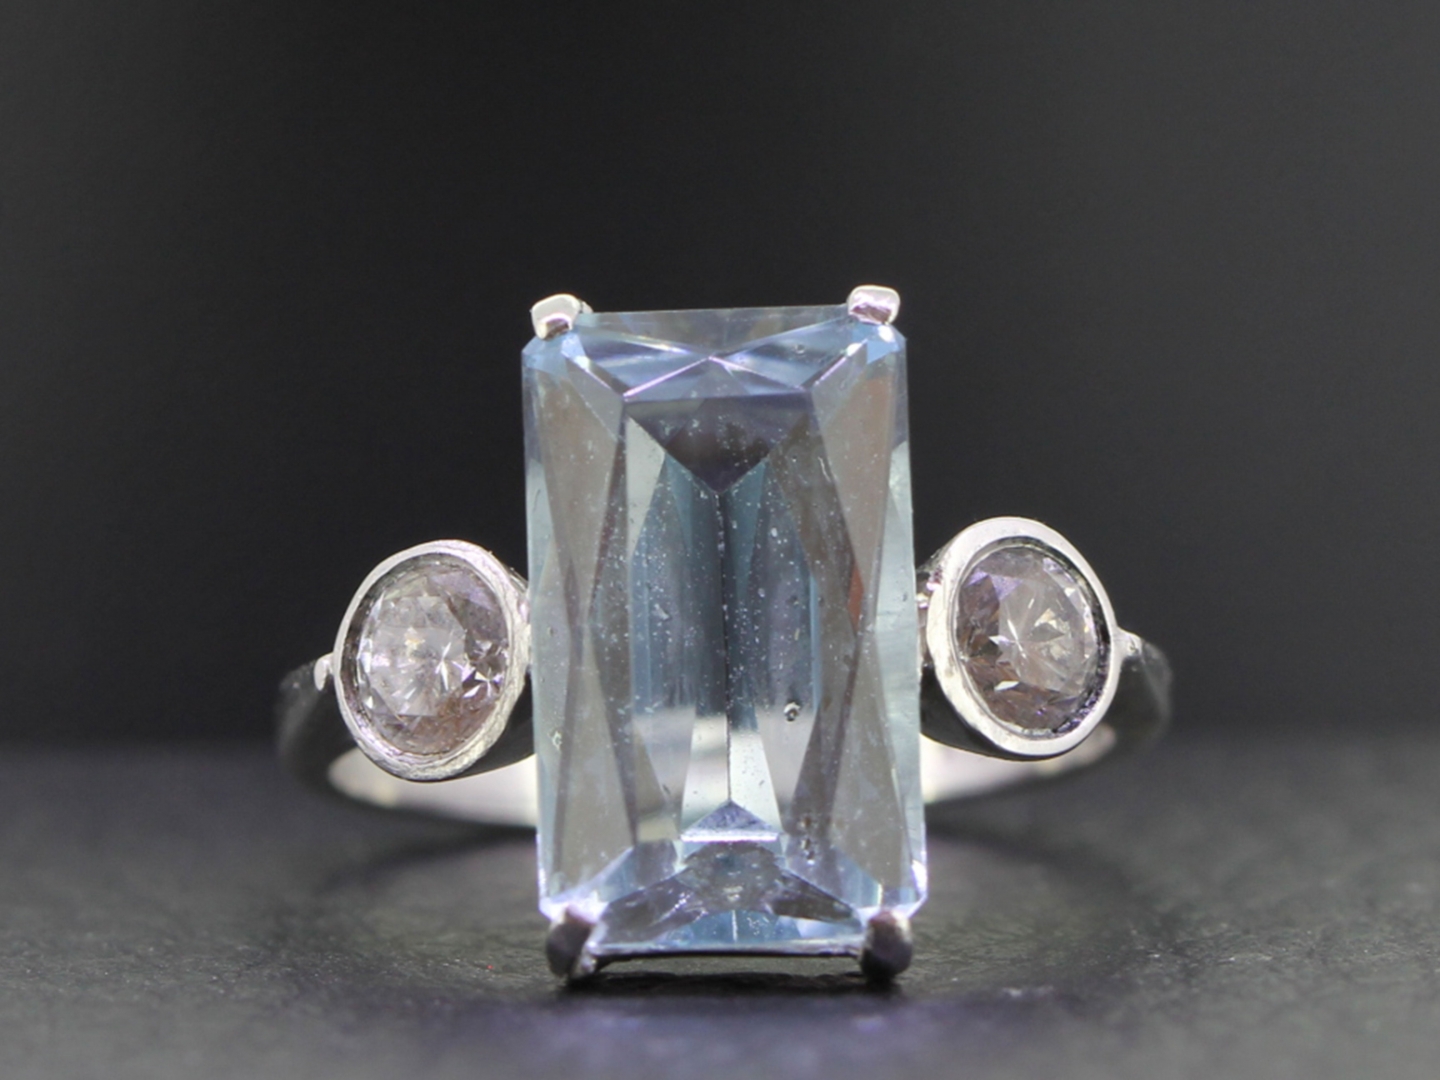 A stunning 4 carat aquamarine and diamond 18 carat white gold ring